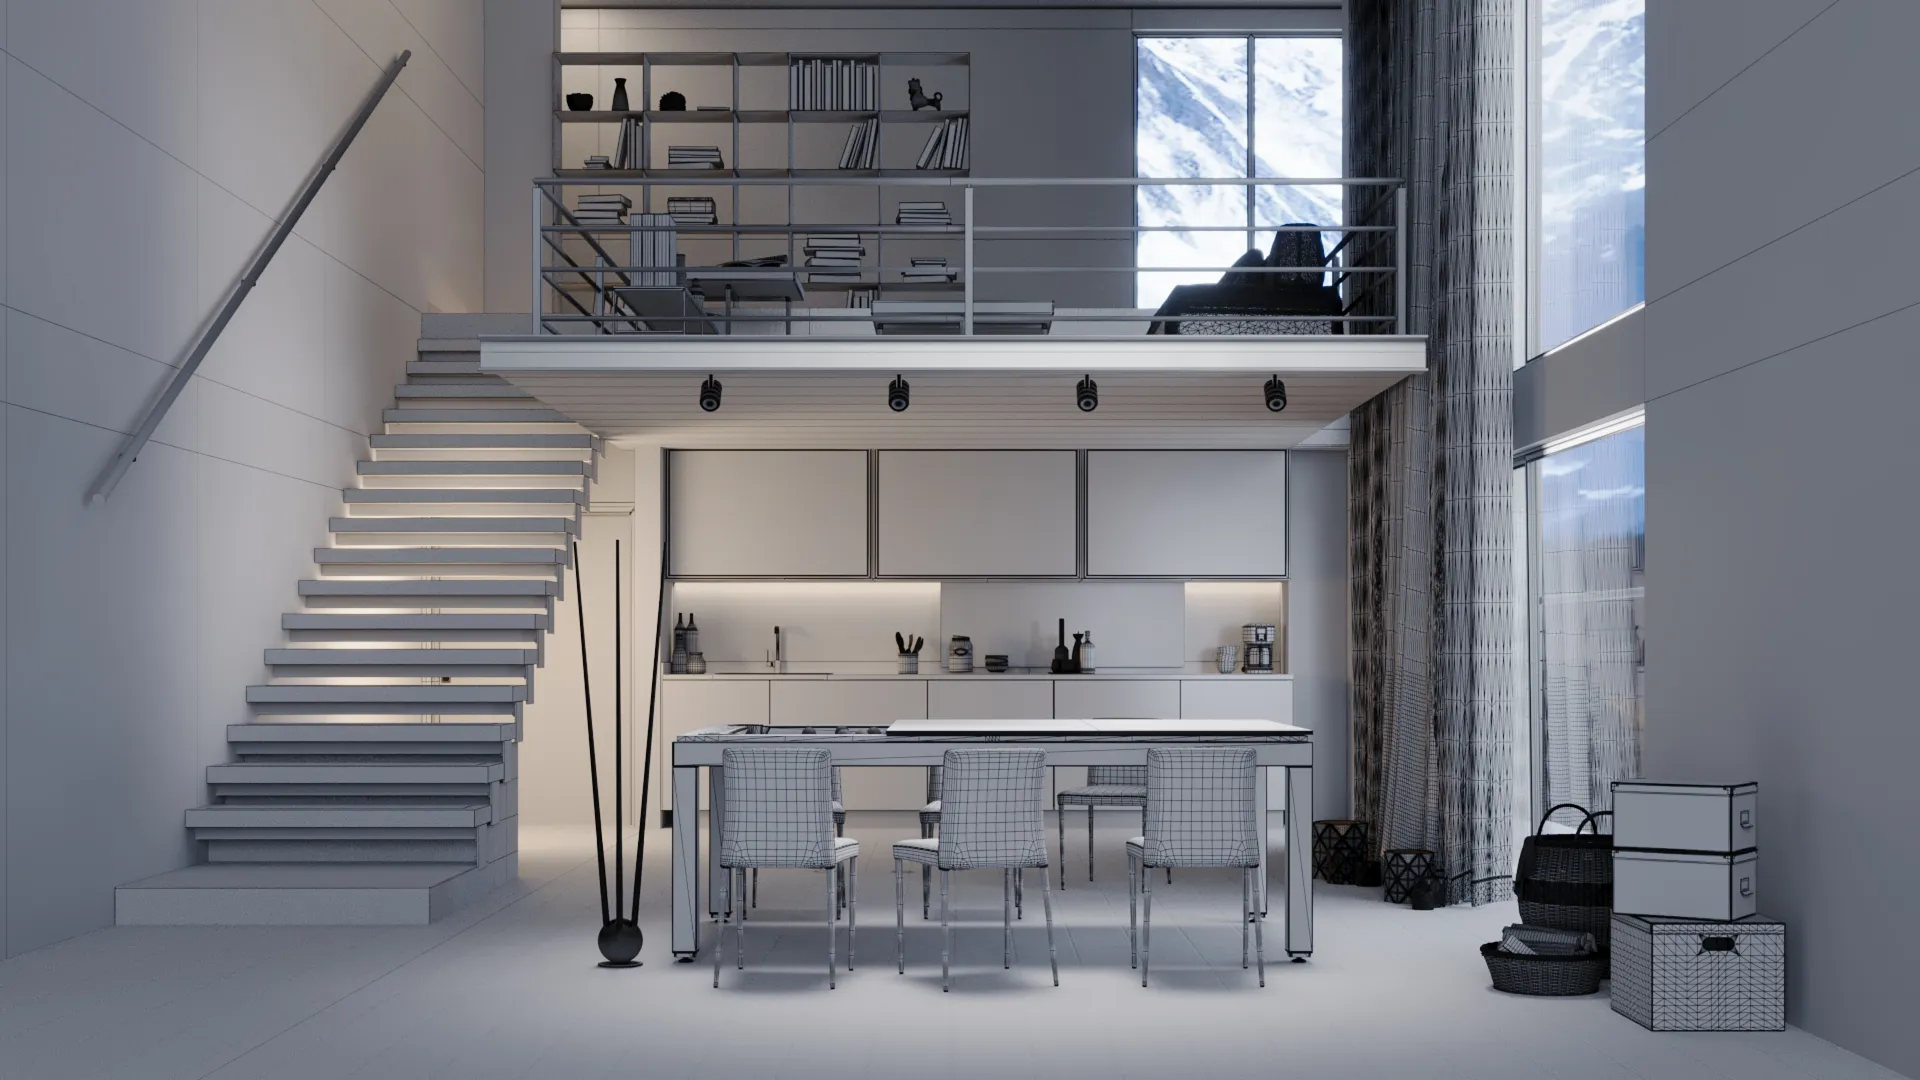 3D visualization of a sleek, white mountain loft kitchen with modern furnishings and alpine views, designed by CGVIZ Studio.